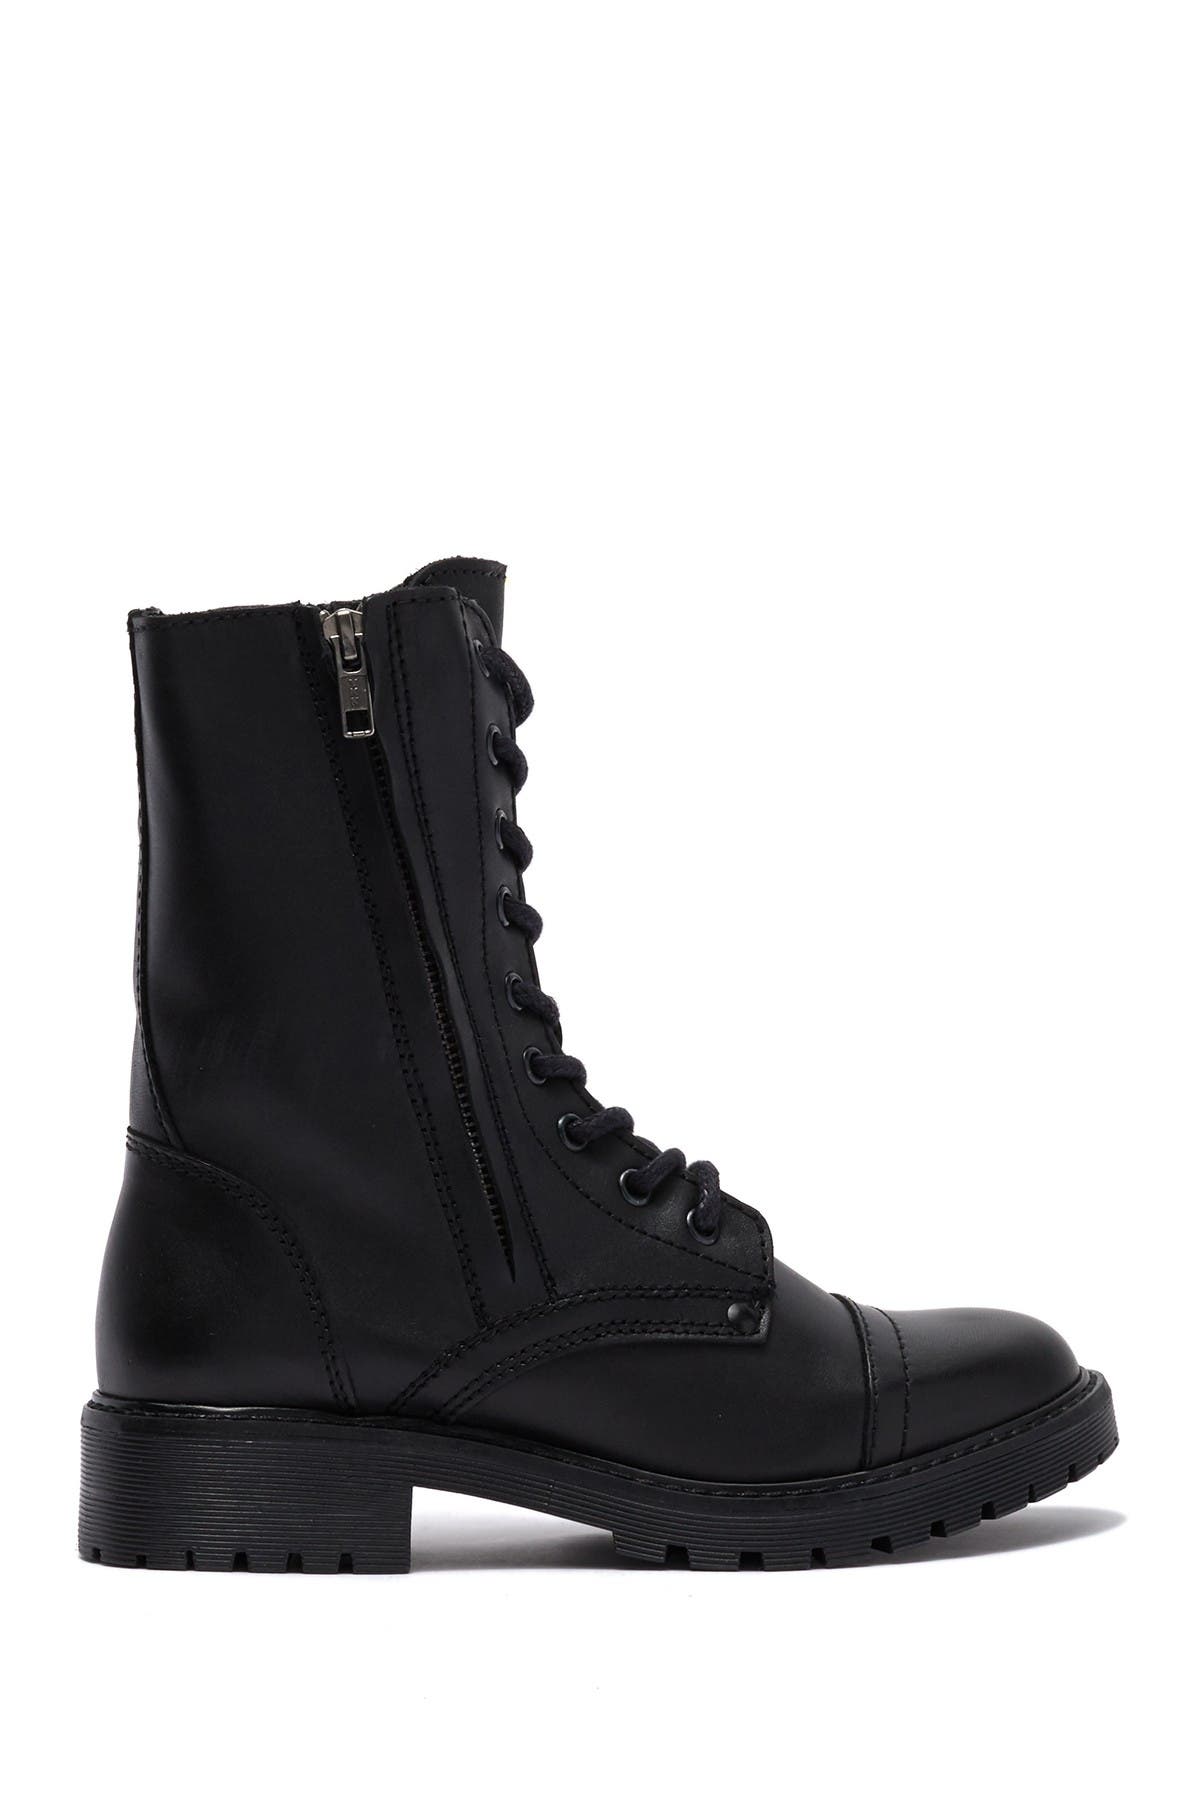 zigi girl combat boots